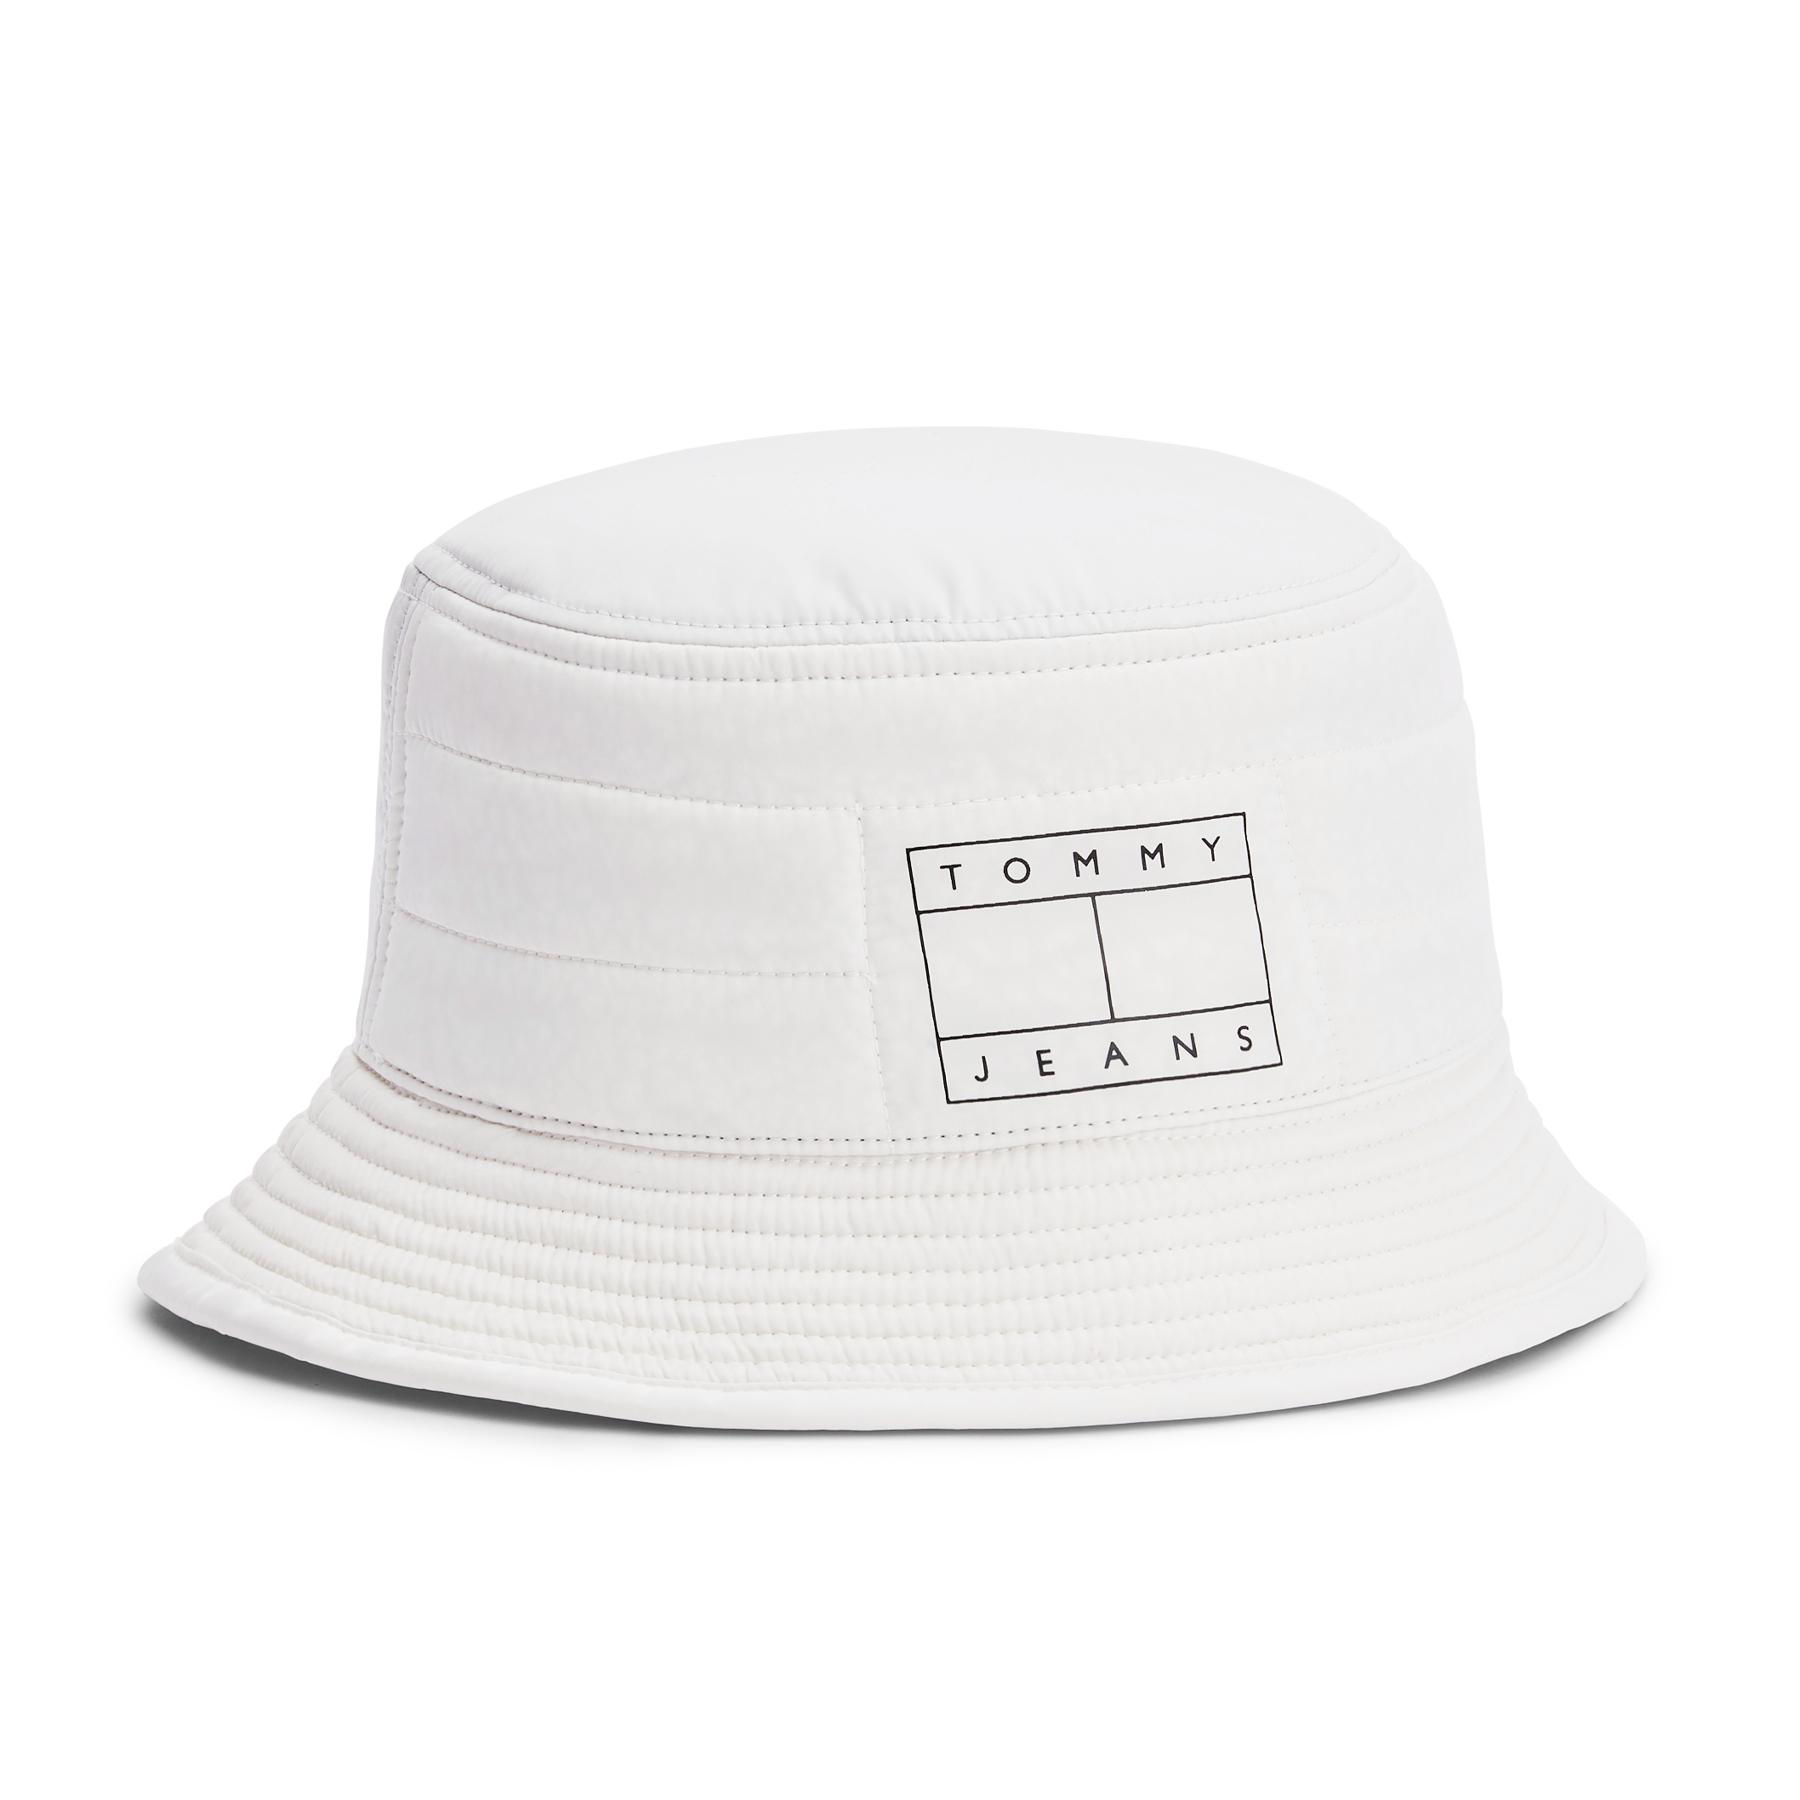 Tommy Hilfiger Heritage Bucket Hat in White | Lyst